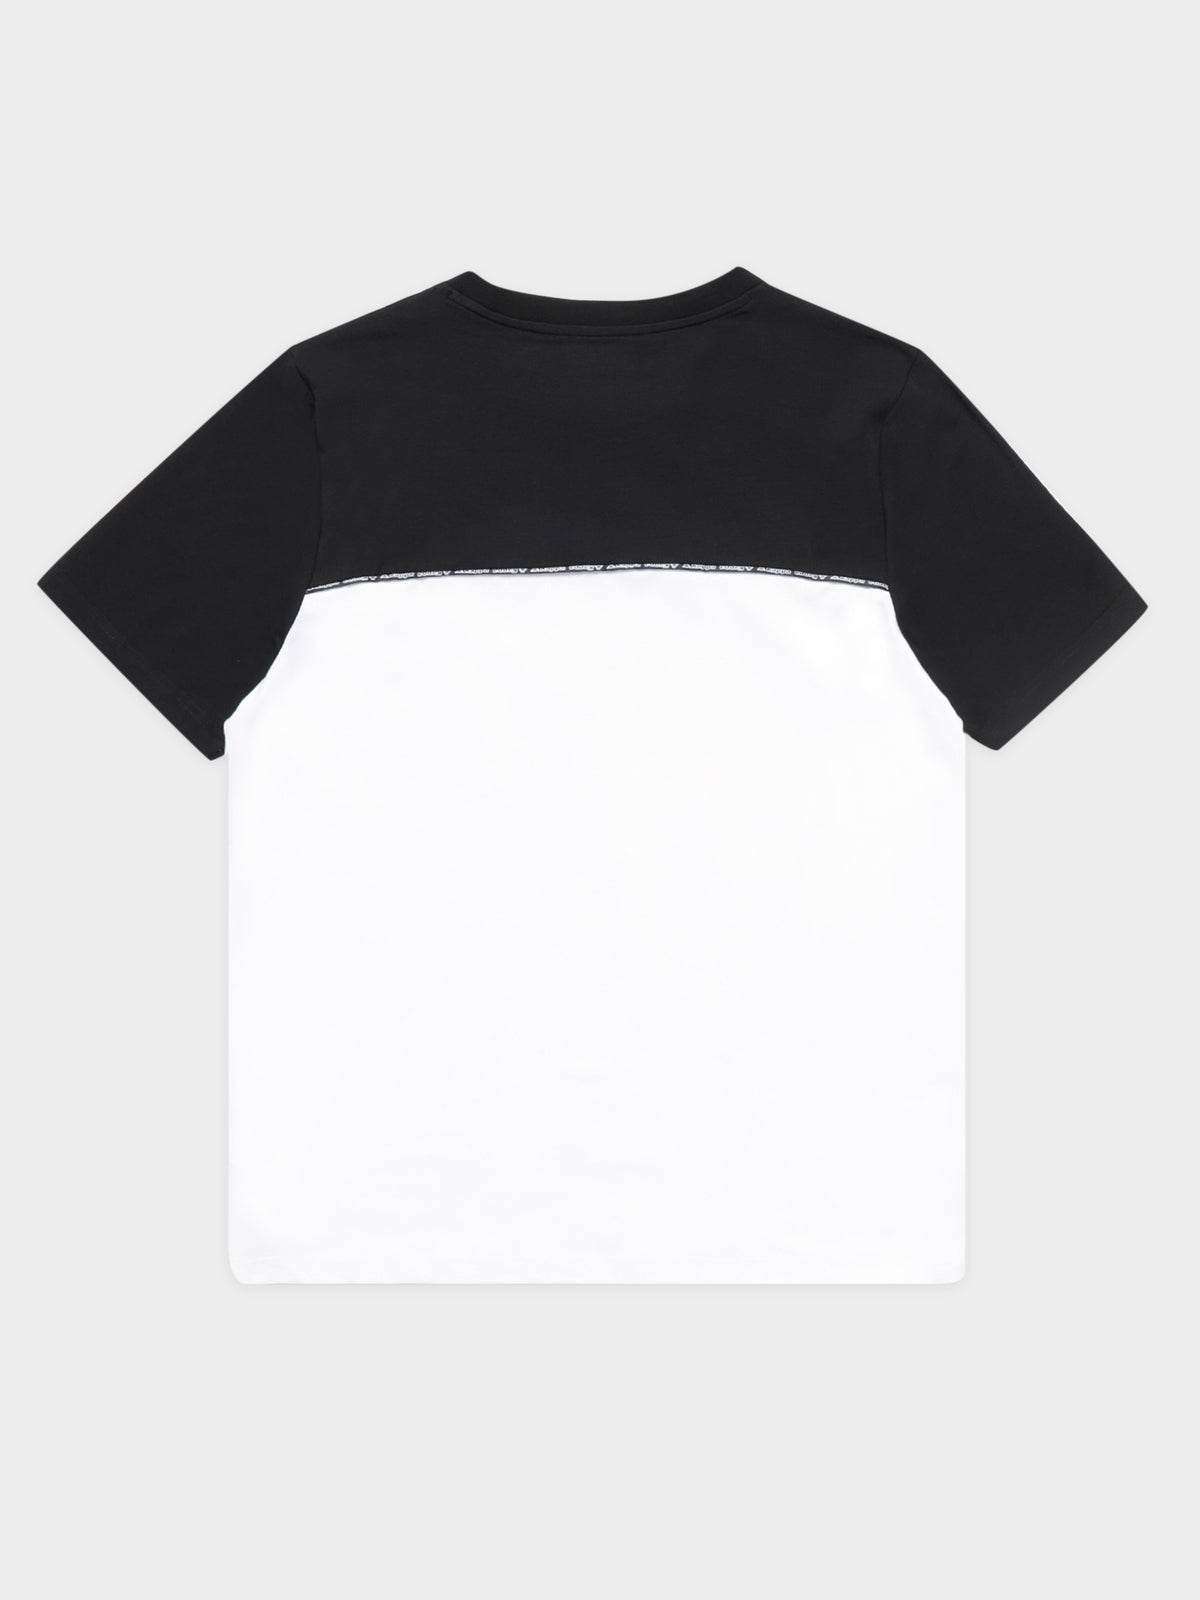 Logo Tape Betan Short Sleeve T-Shirt in Black